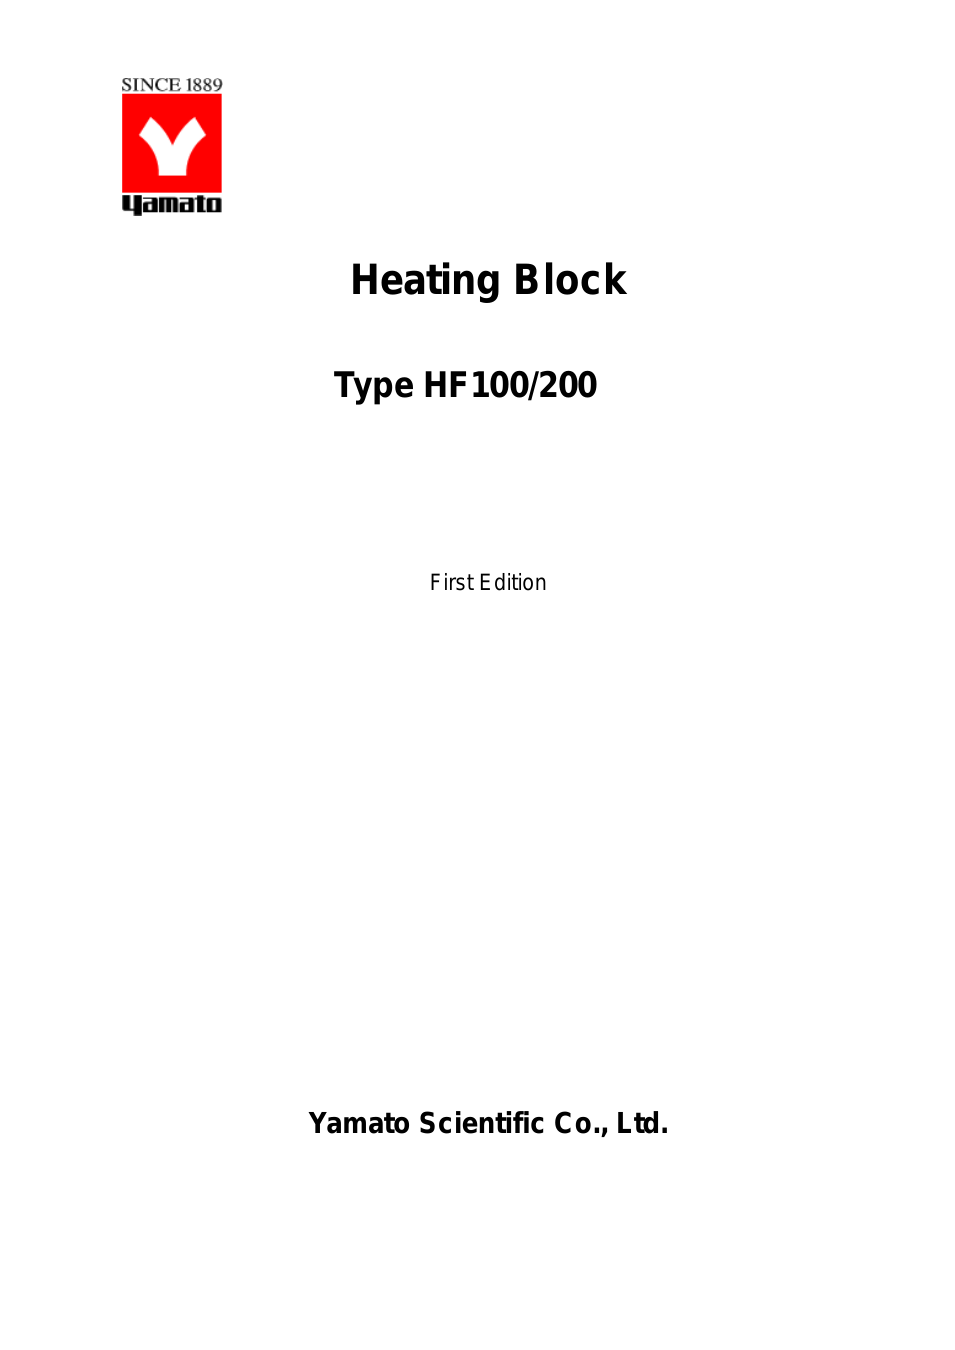 HF100 Heating Block